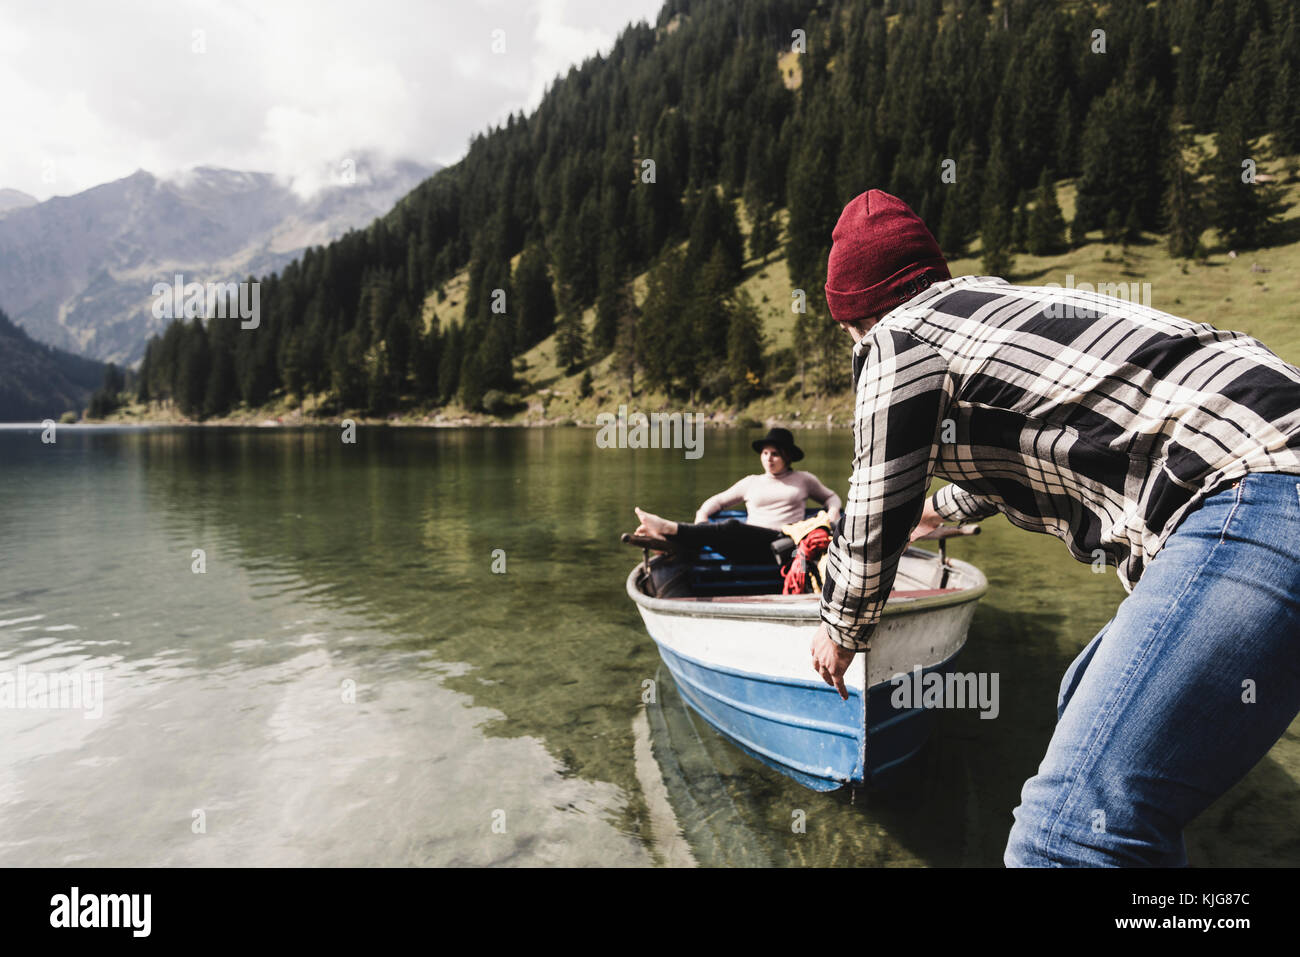 Austria, Tyrol, Alps, couple with rowing boat on mountain lake Stock Photo